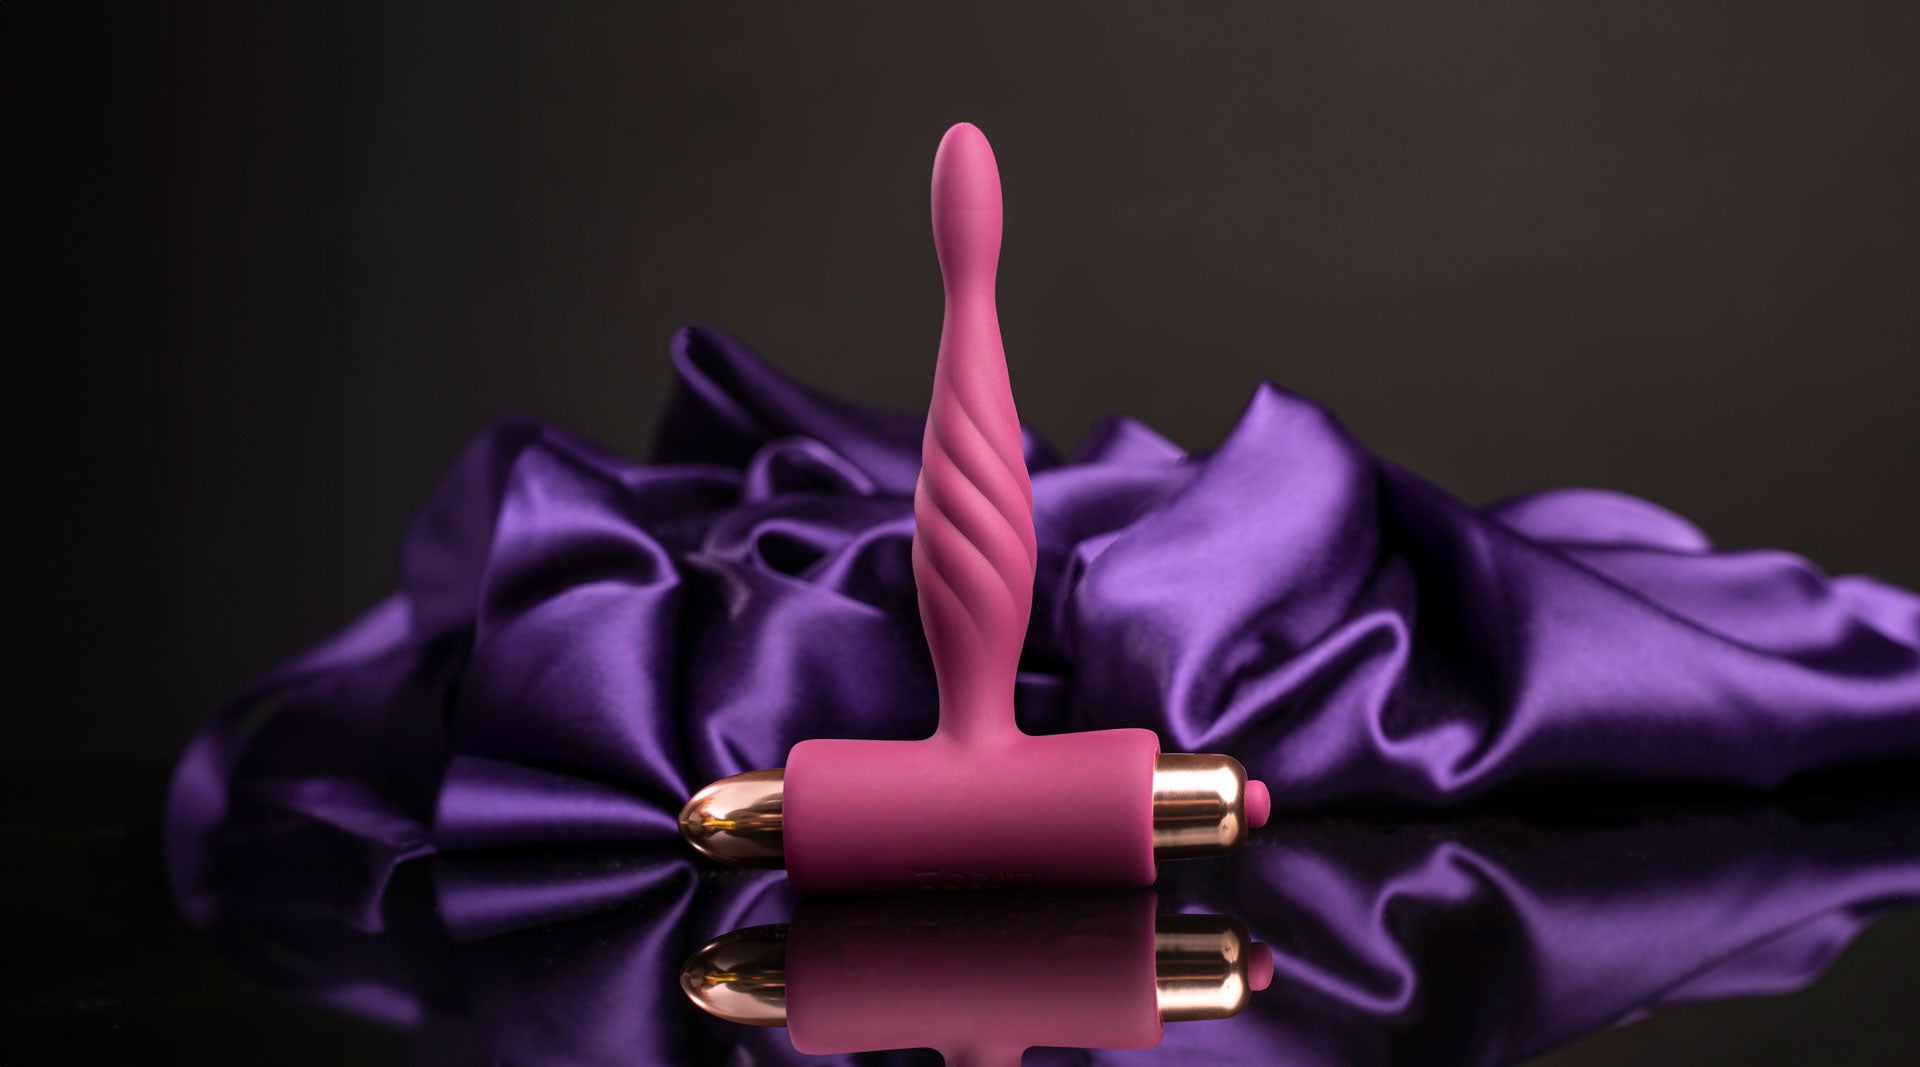 Super slim burgundy butt plug housing a removable rose gold bullet vibrator.